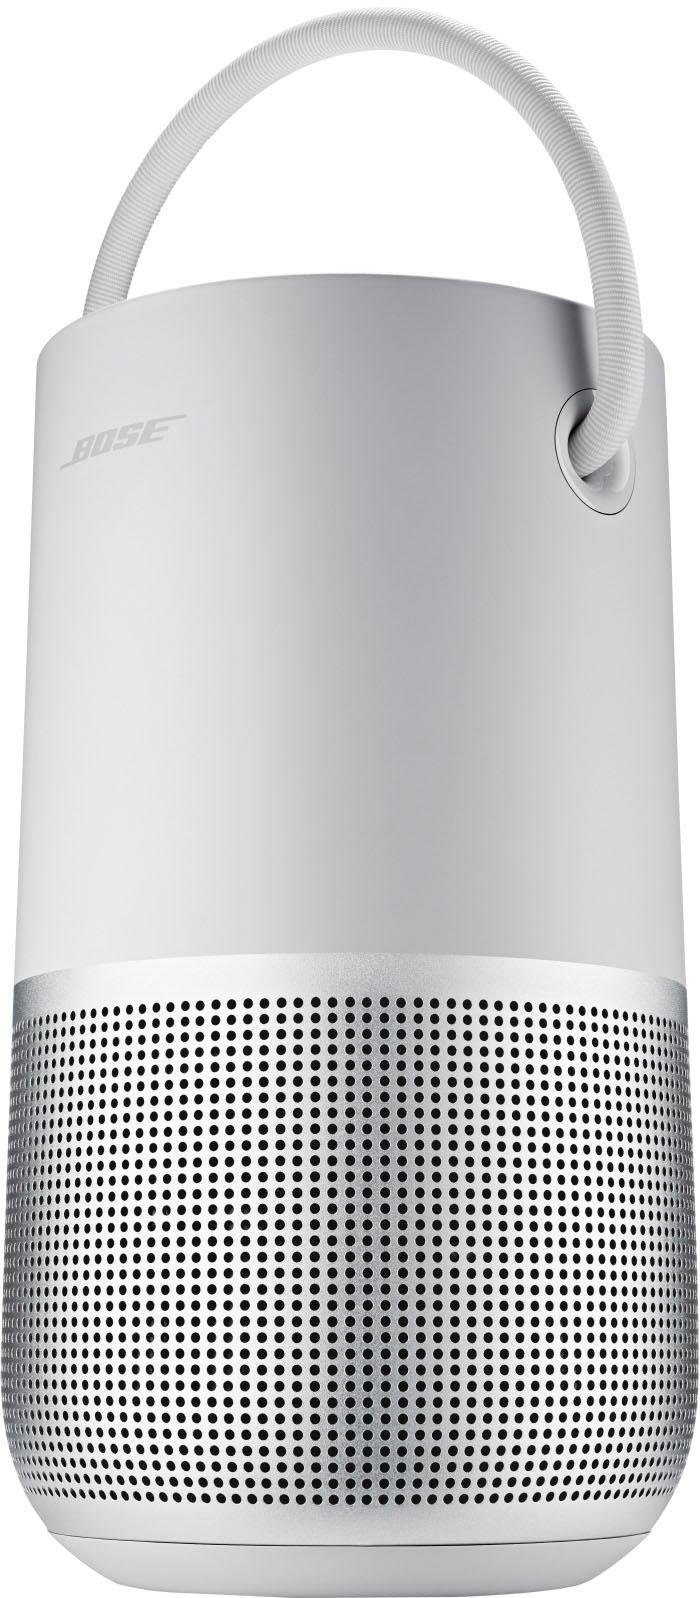 Bose Bluetooth-Lautsprecher »Portable Home Speaker Bluetooth- u. WLAN Lautsprecher«, AirPlay 2, wasserabweisend, kraftvoller 360°-Klang, Multiroom